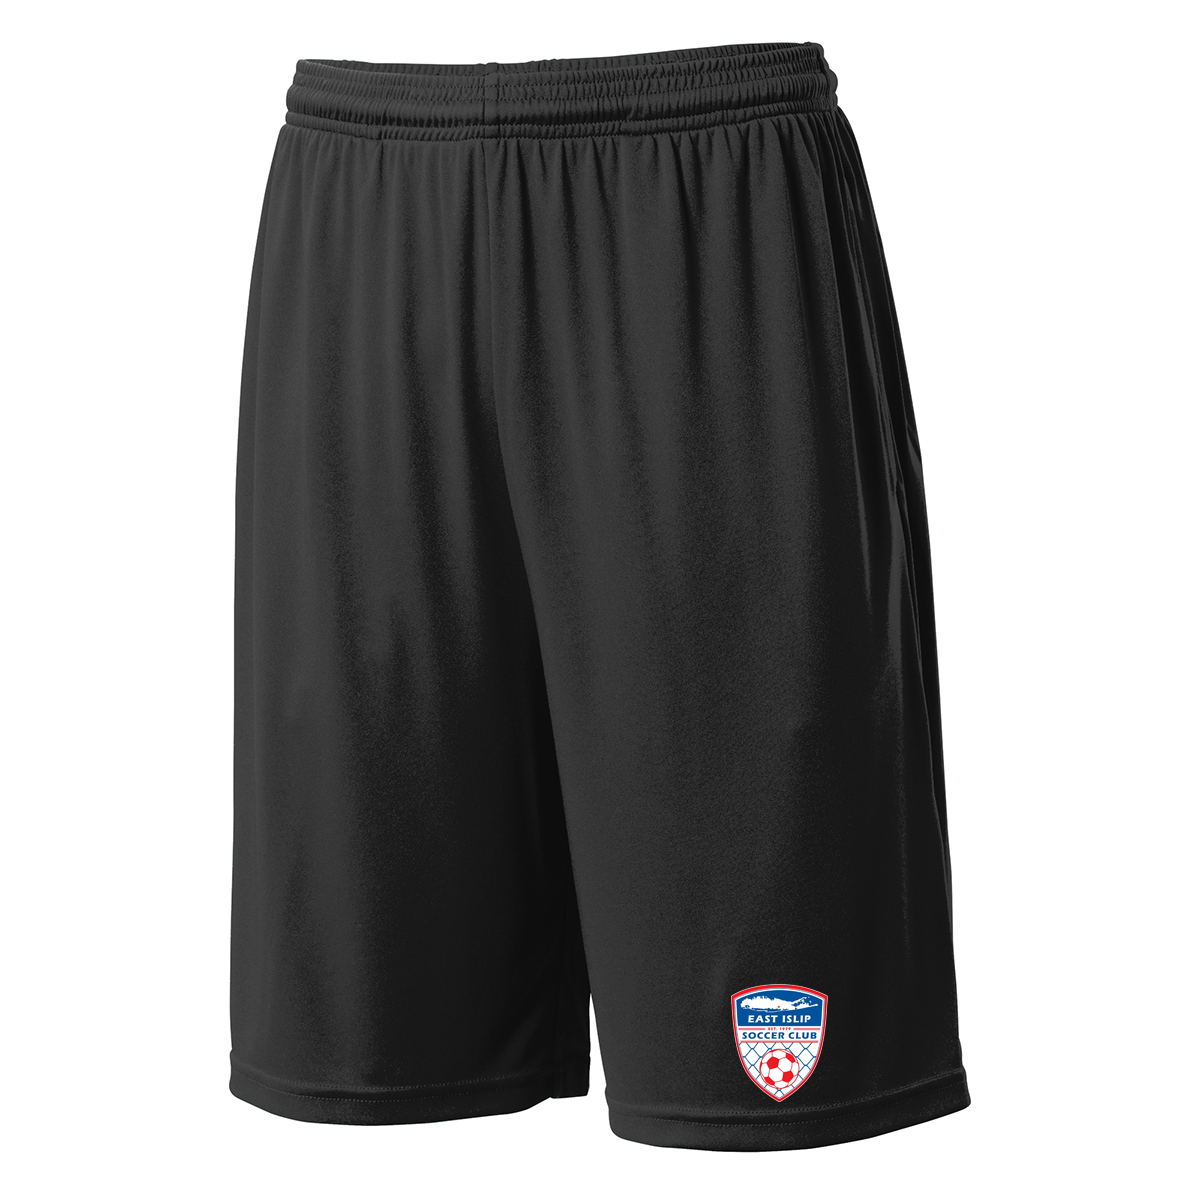 East Islip Soccer Club Shorts